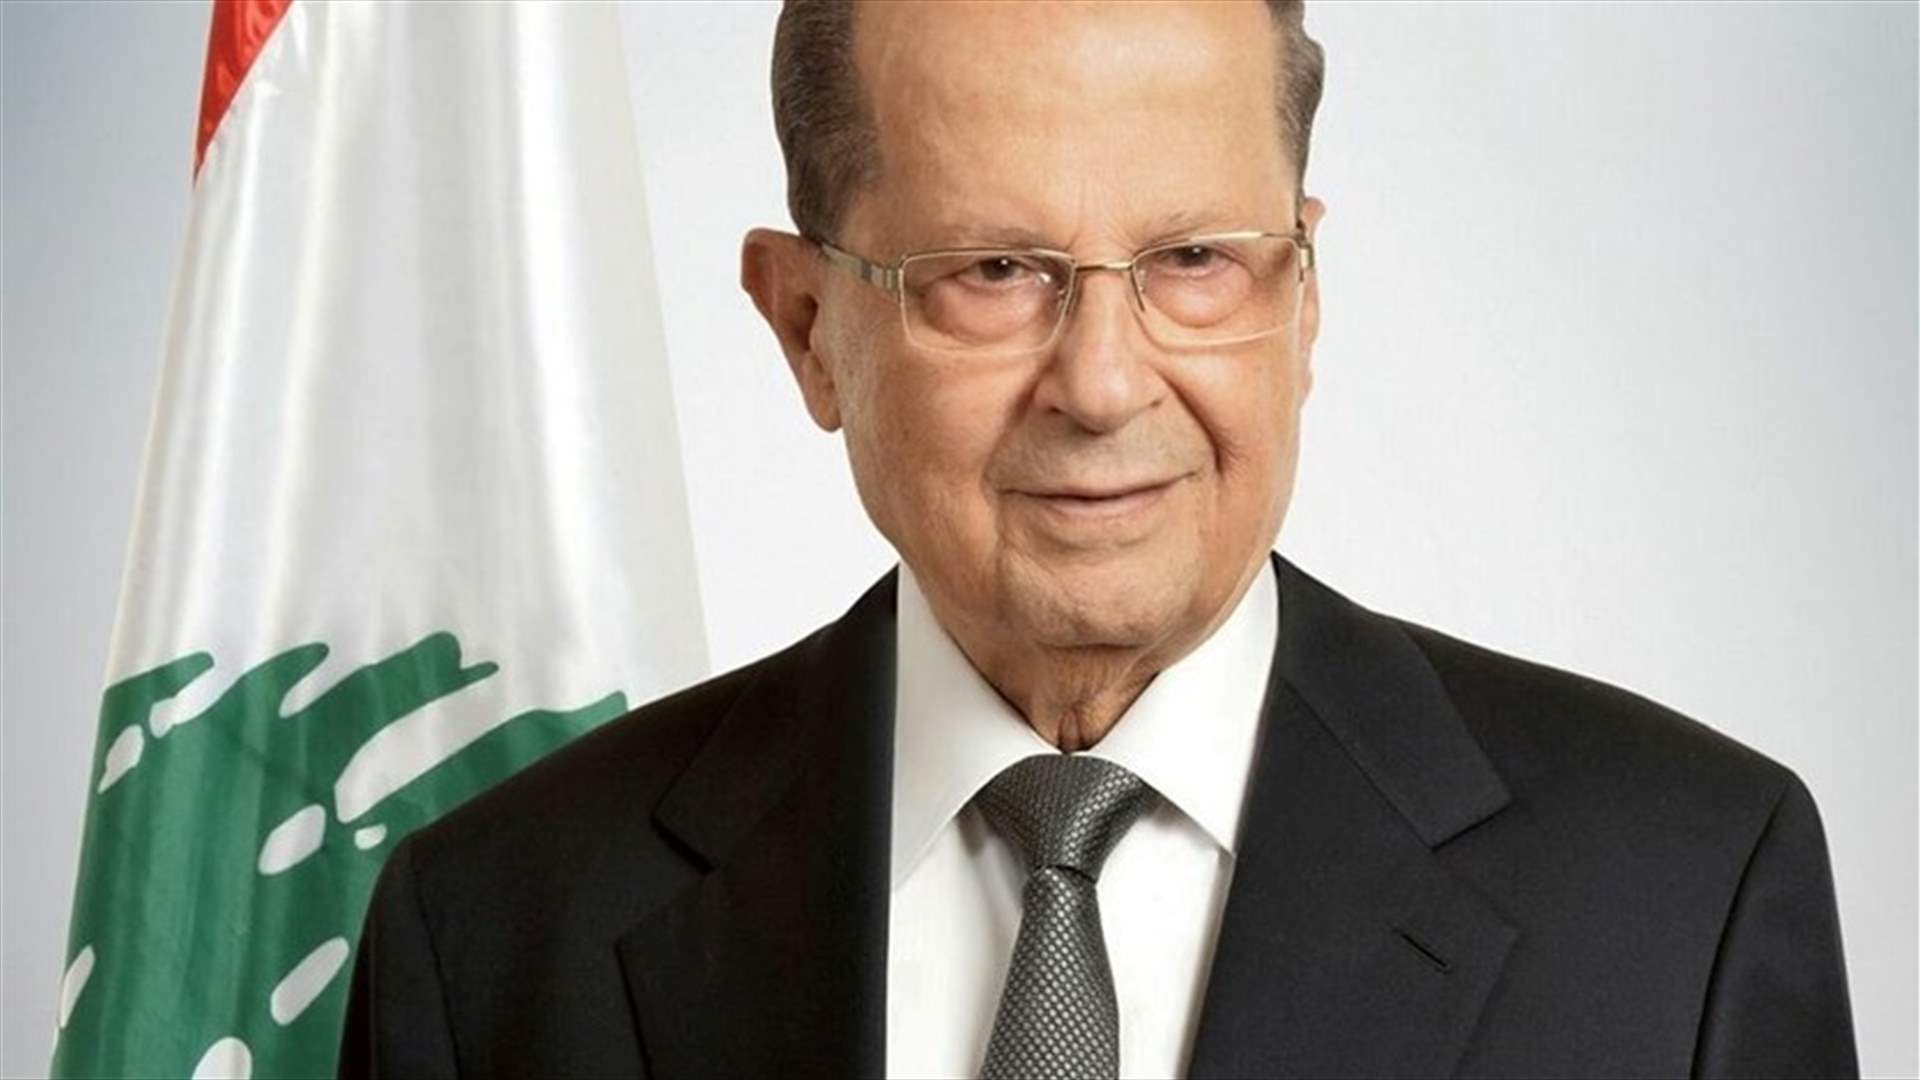 Aoun offers condolences to Cubans, hopes Castro’s memory will empower future of Cuba